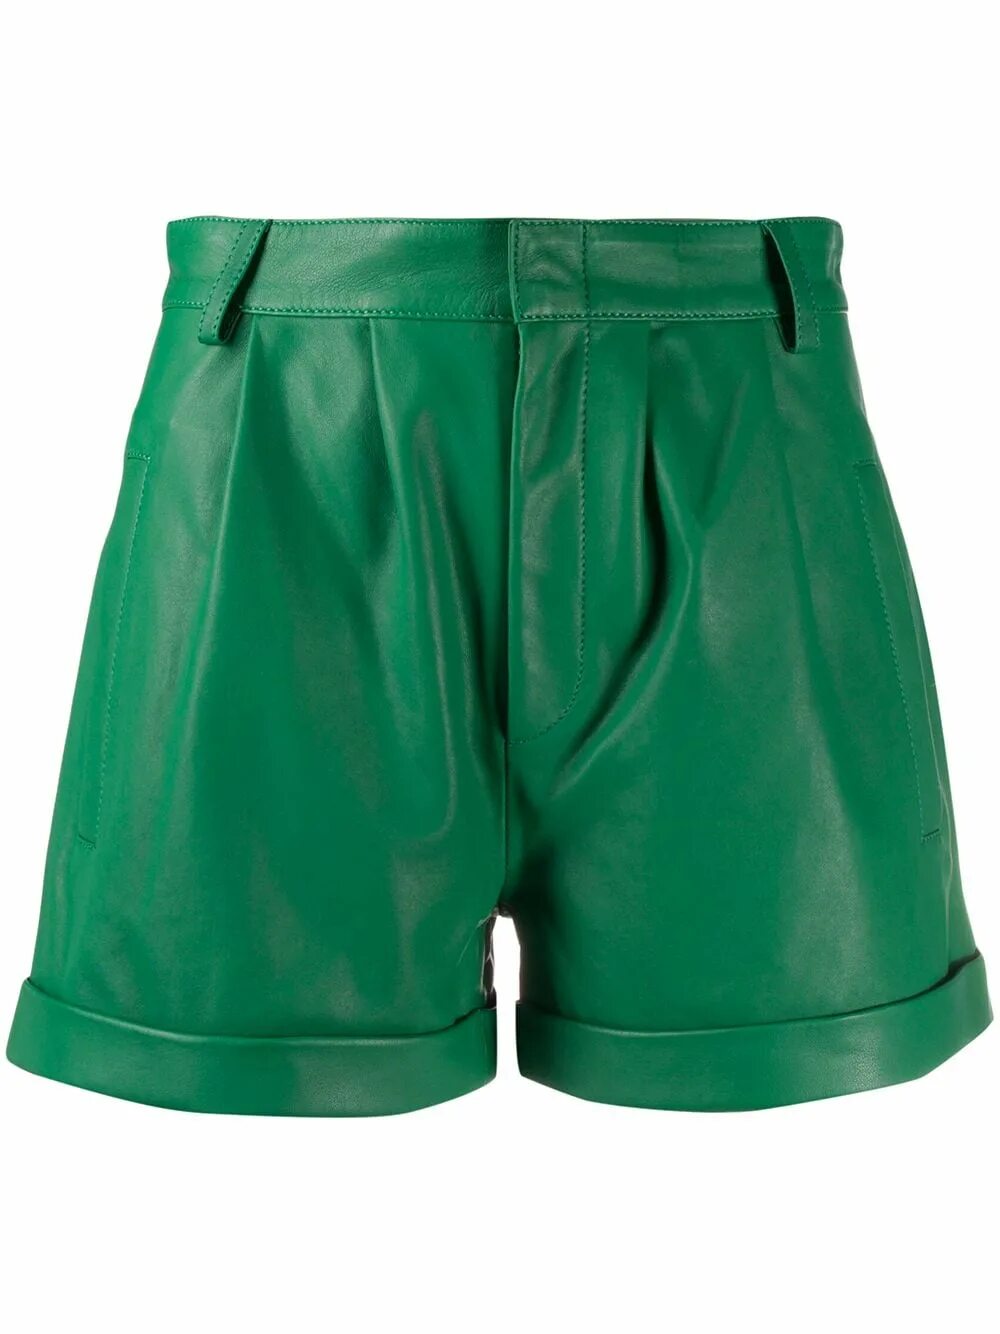 Шорты Federica Tosi. Шорты зеленые Боттега Венета. Зеленые шорты. Салатовые шорты.